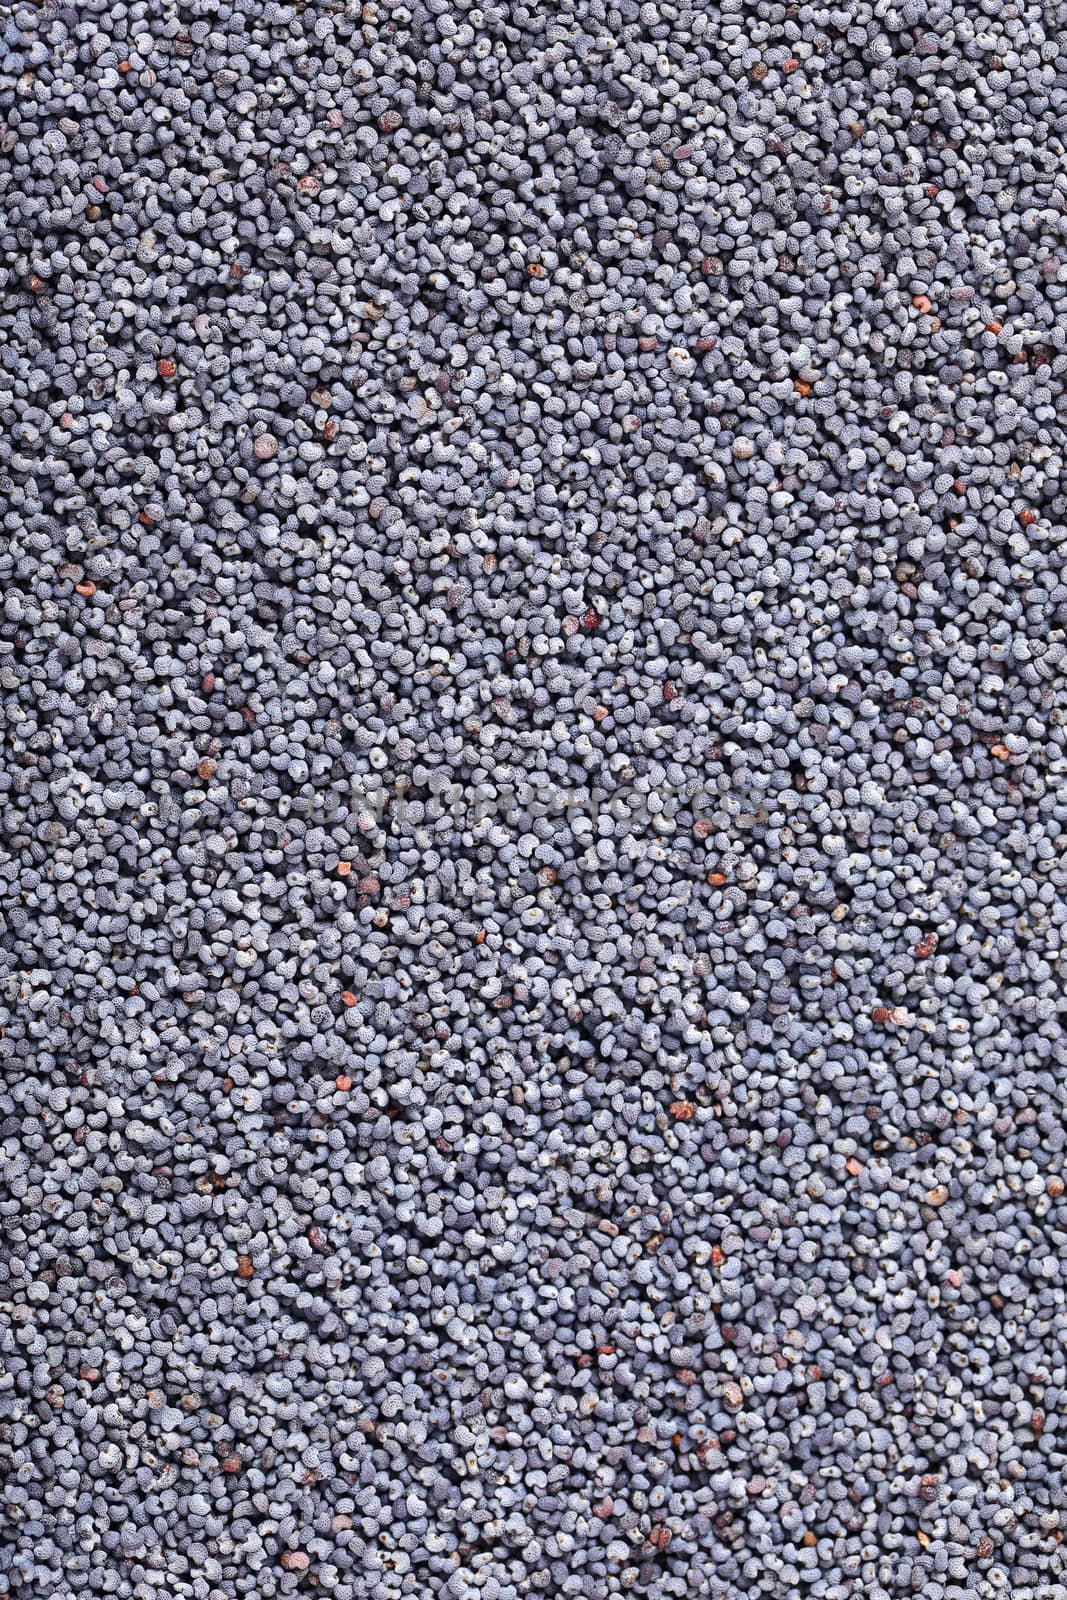 whole blue poppy seeds background